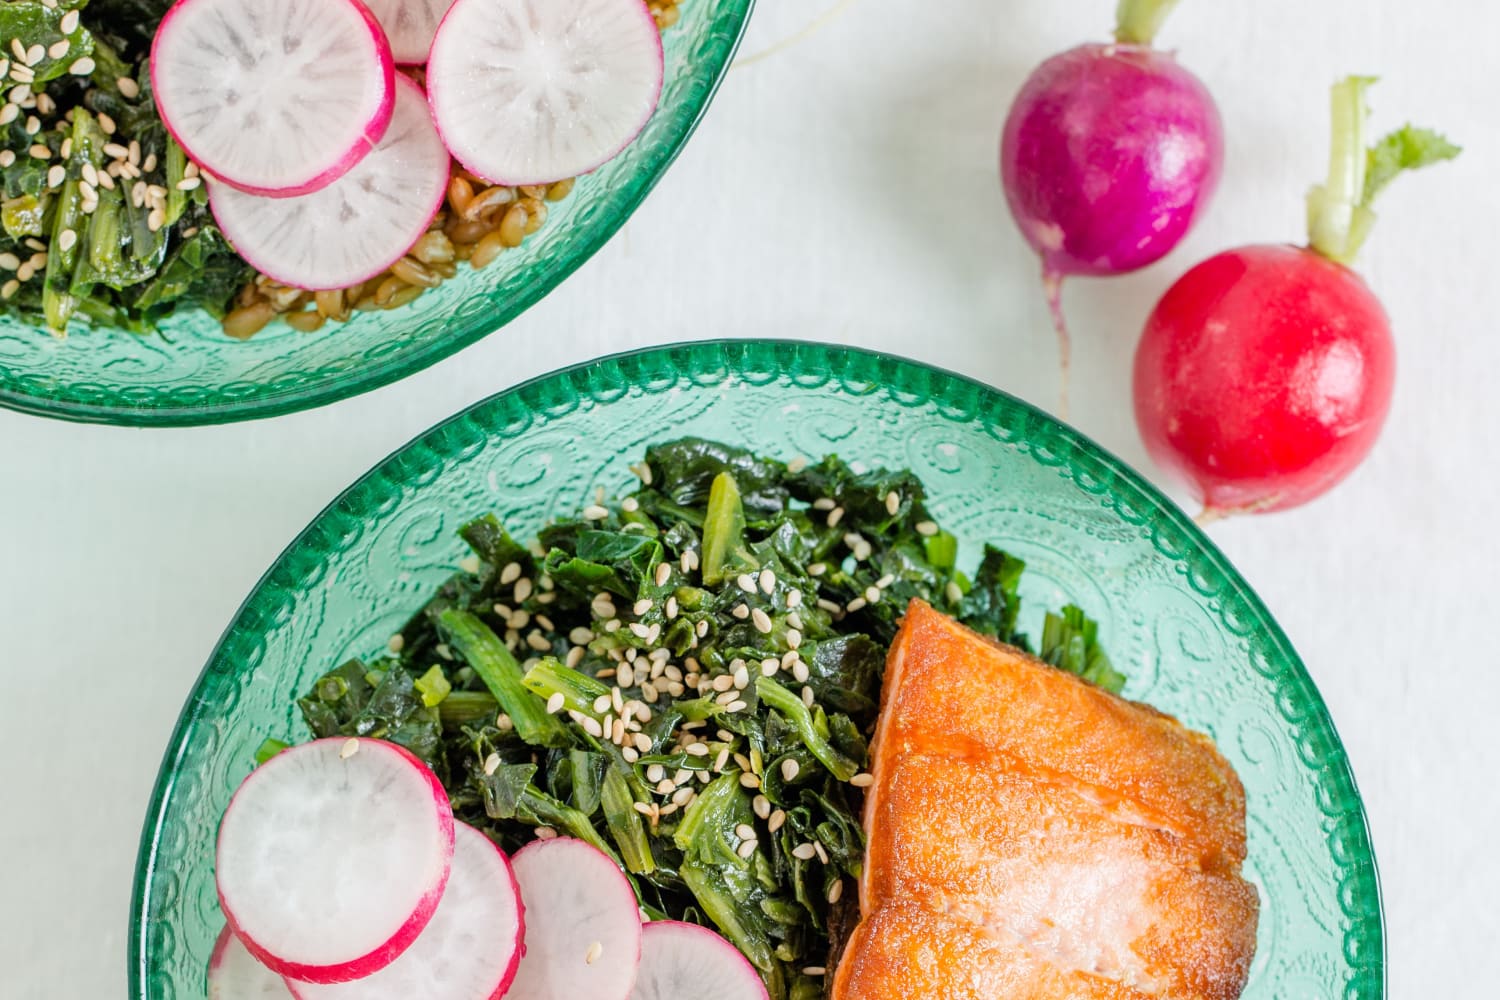 25 Make-Ahead Lunch Bowl Recipes